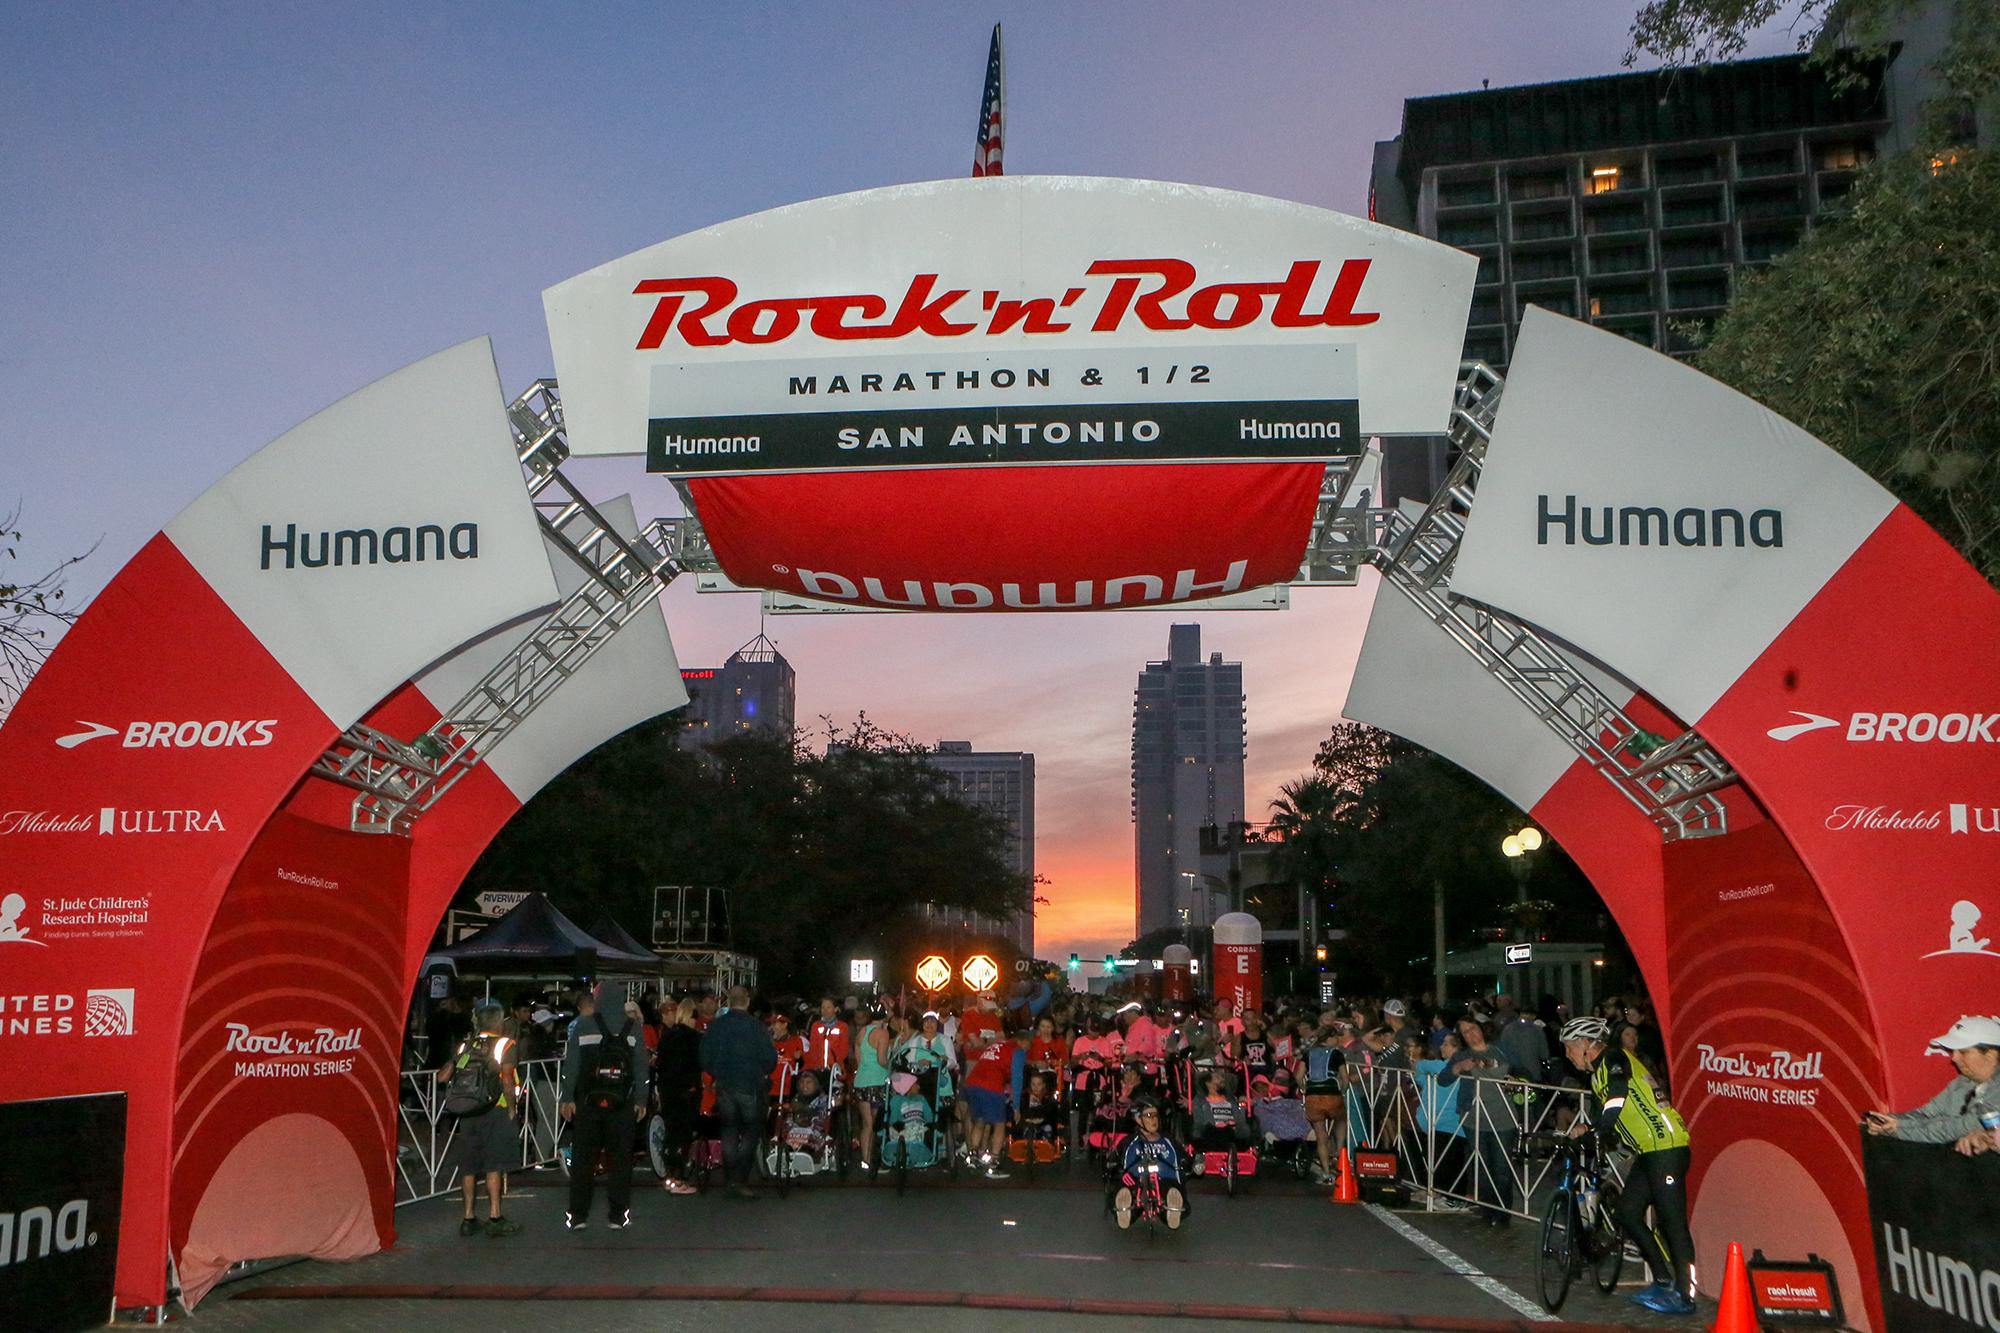 Rock 'n' Roll Marathon sprints back to San Antonio this December